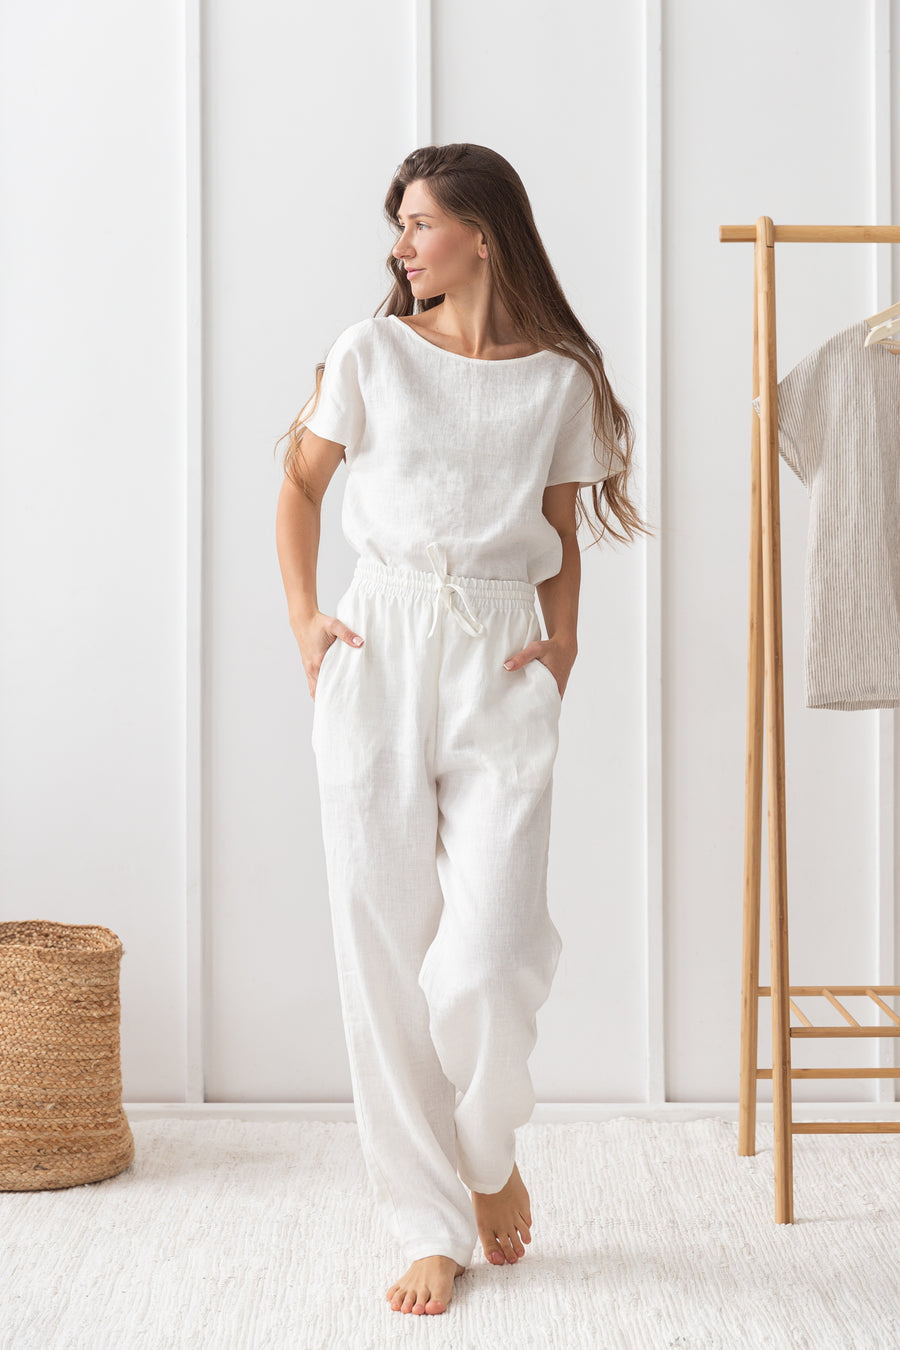 White linen / Natural Linen Pajama set / Linen loungewear / Linen sleepwear - Linen Couture Boutique